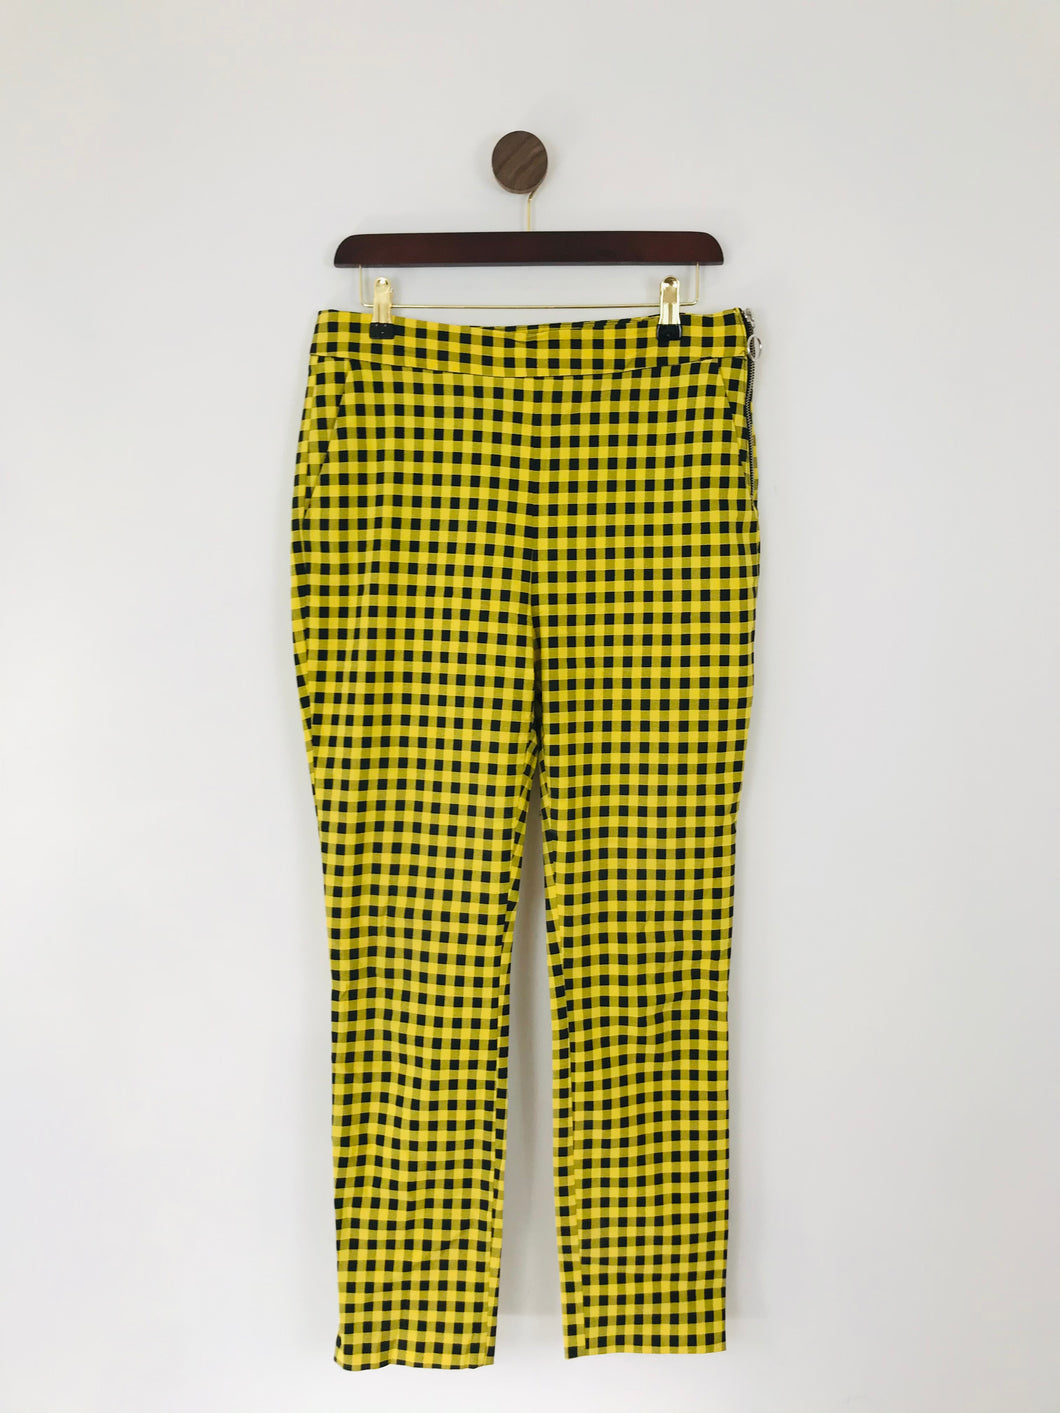 Zara Women’s Gingham Skinny Trousers | L UK14 | Yellow Black